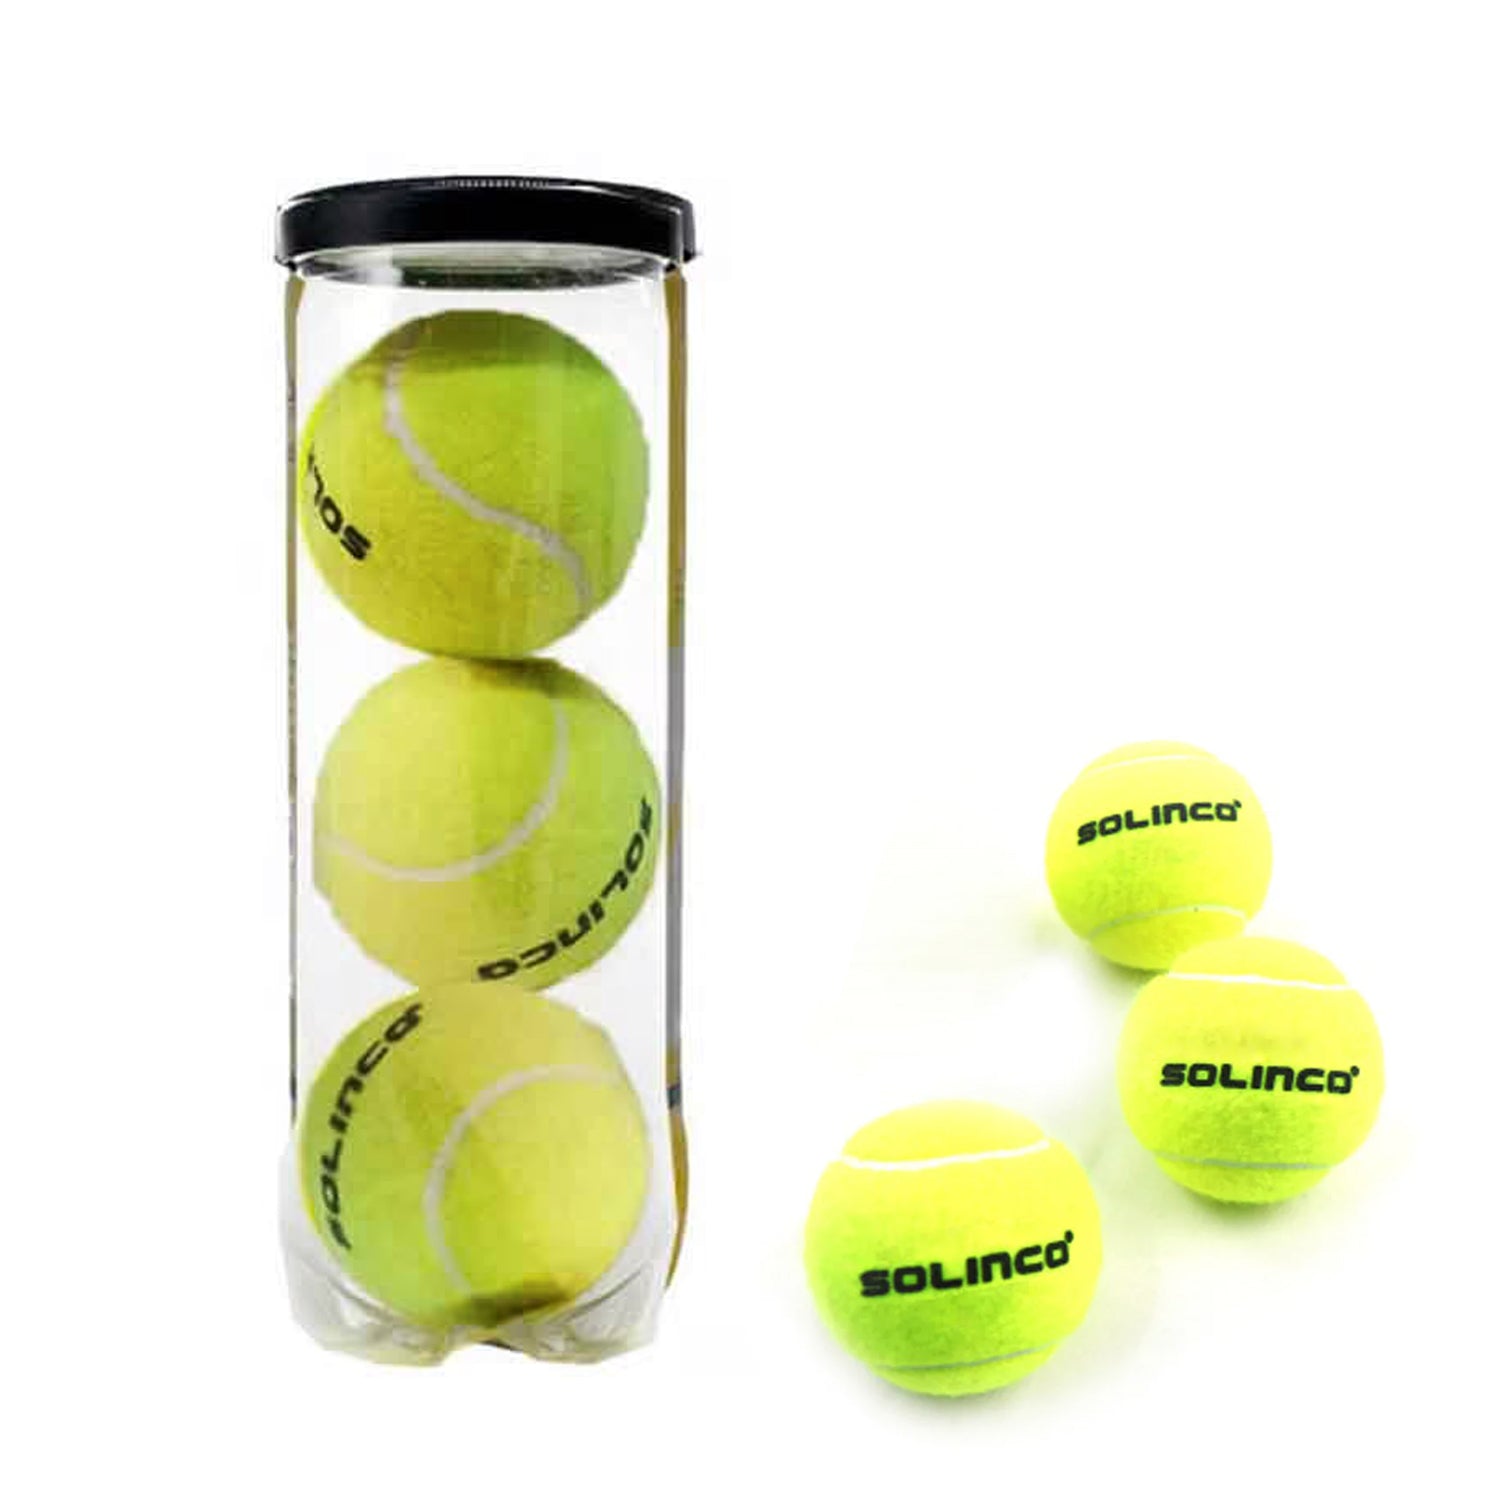 Solinco Pro Performance Tennis Ball, Yellow - Best Price online Prokicksports.com